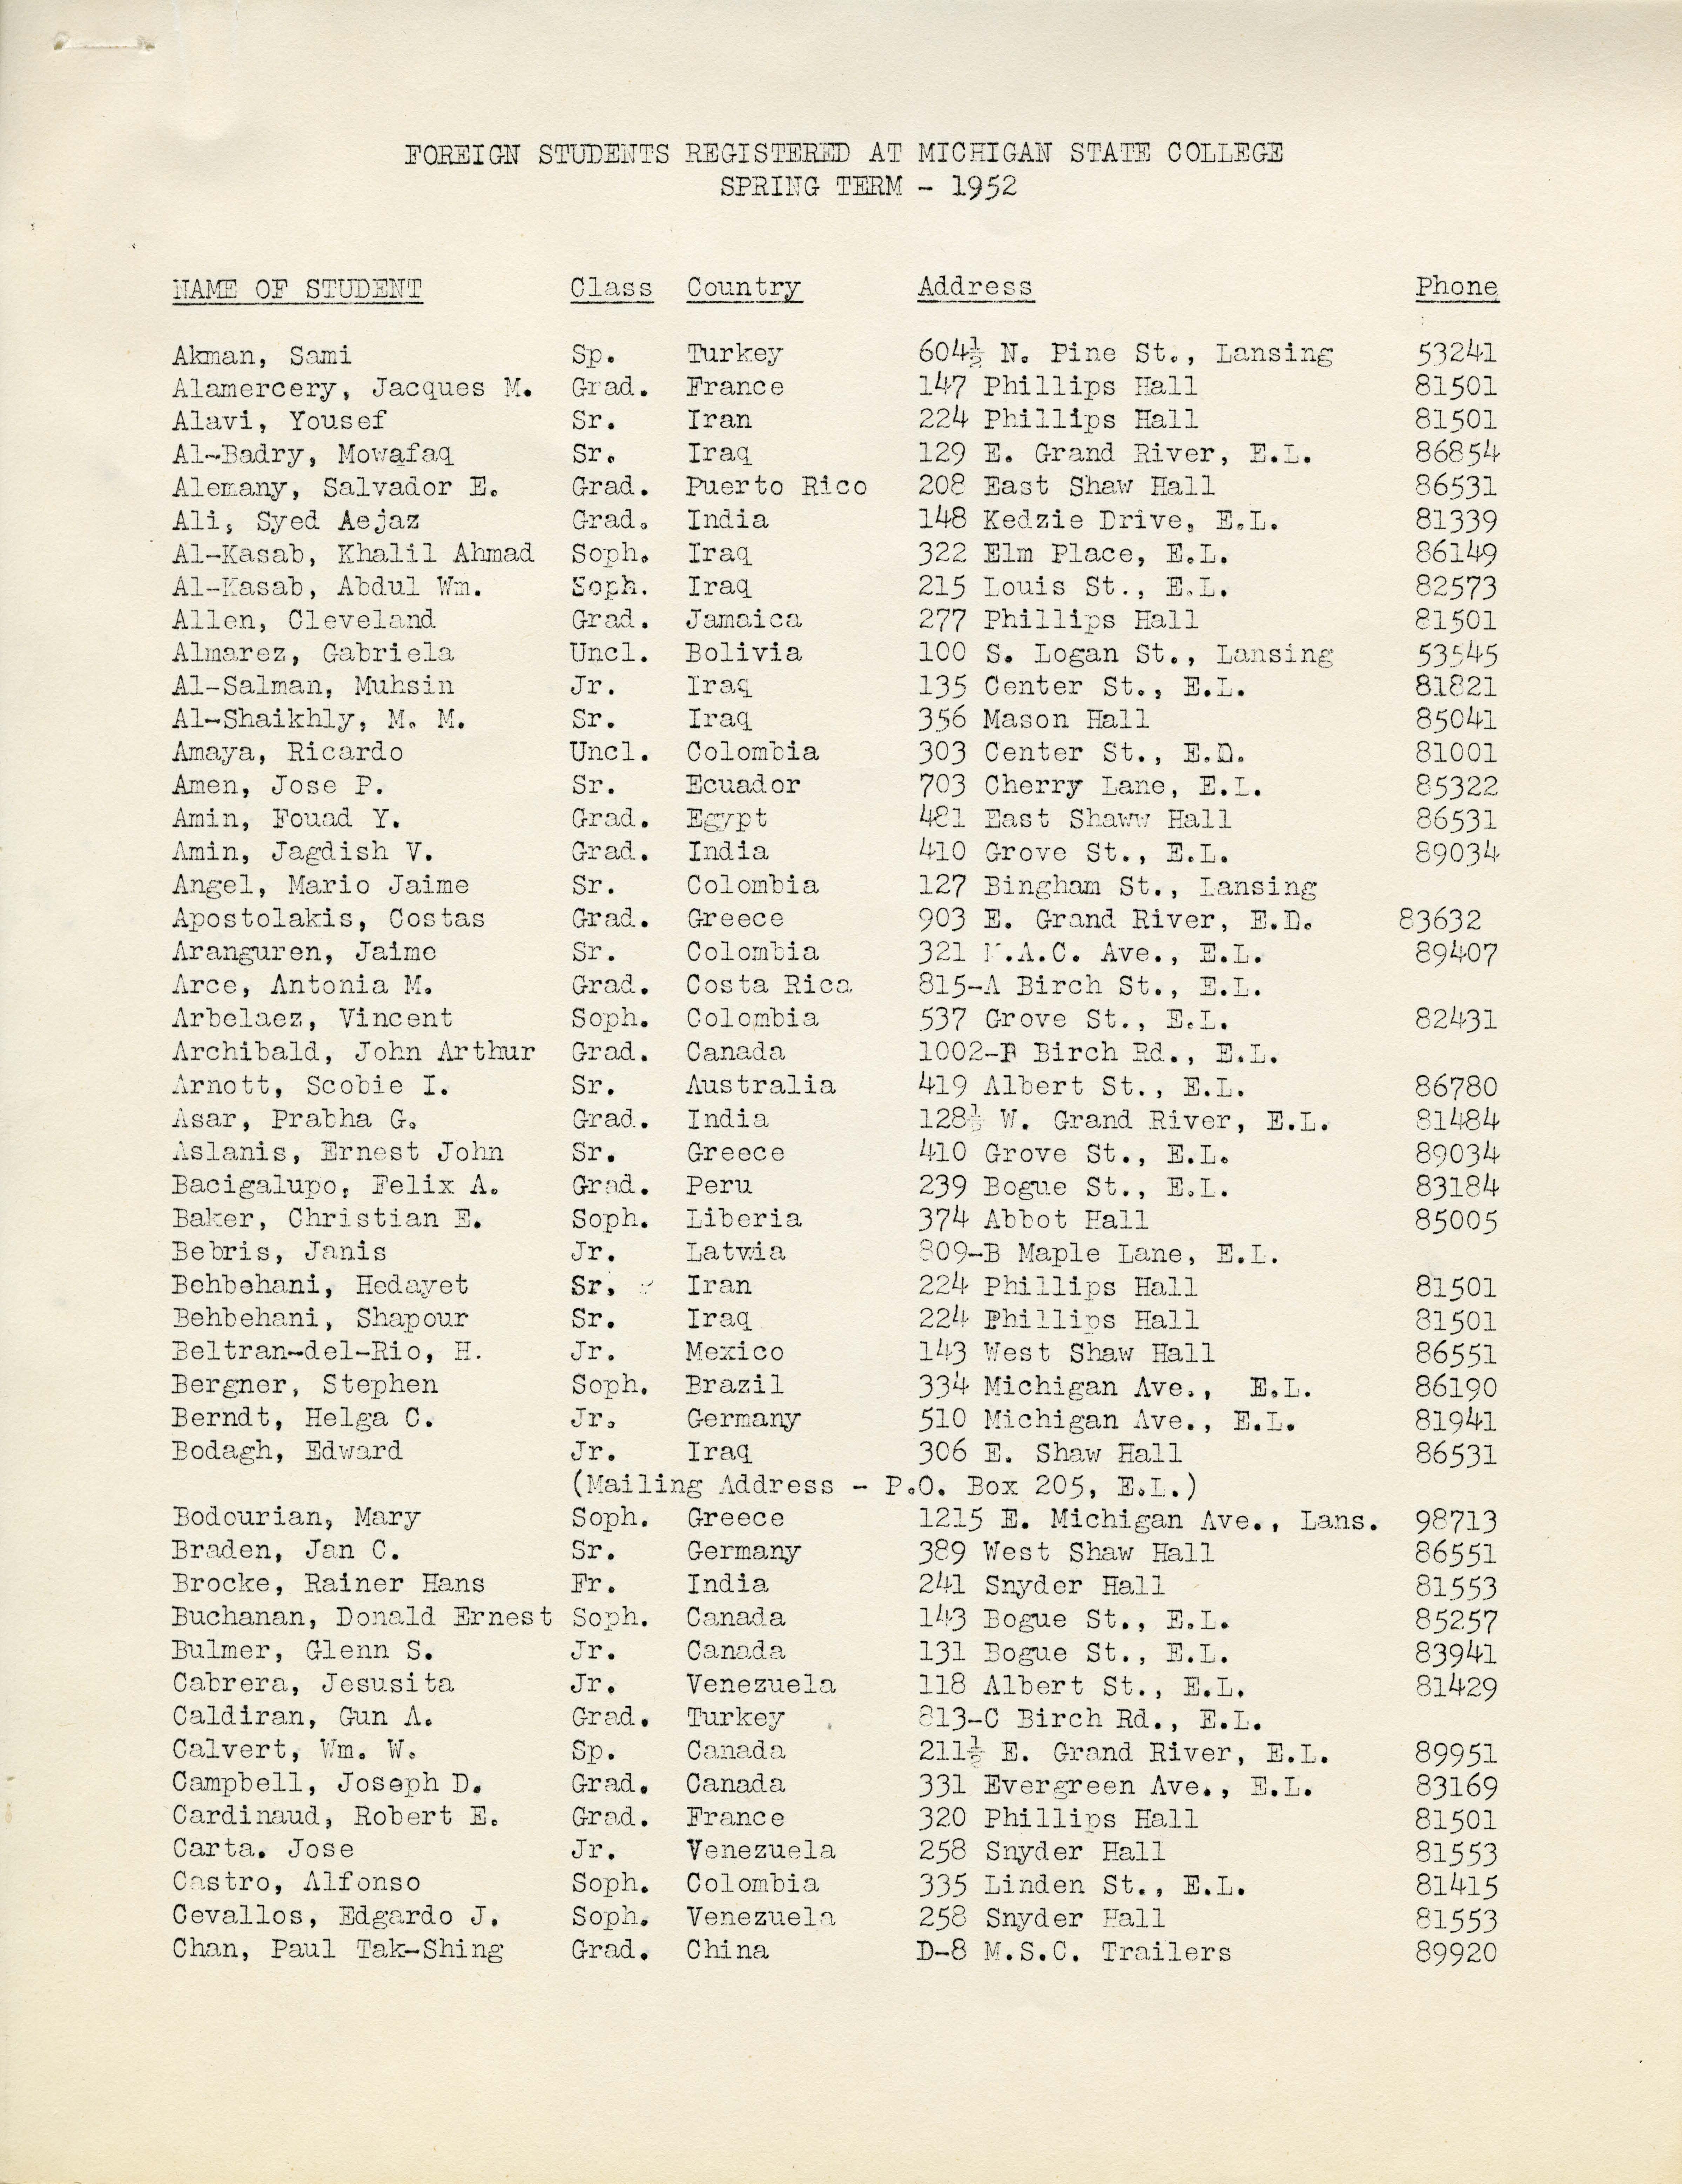 1952 (Spring) International Student Directory